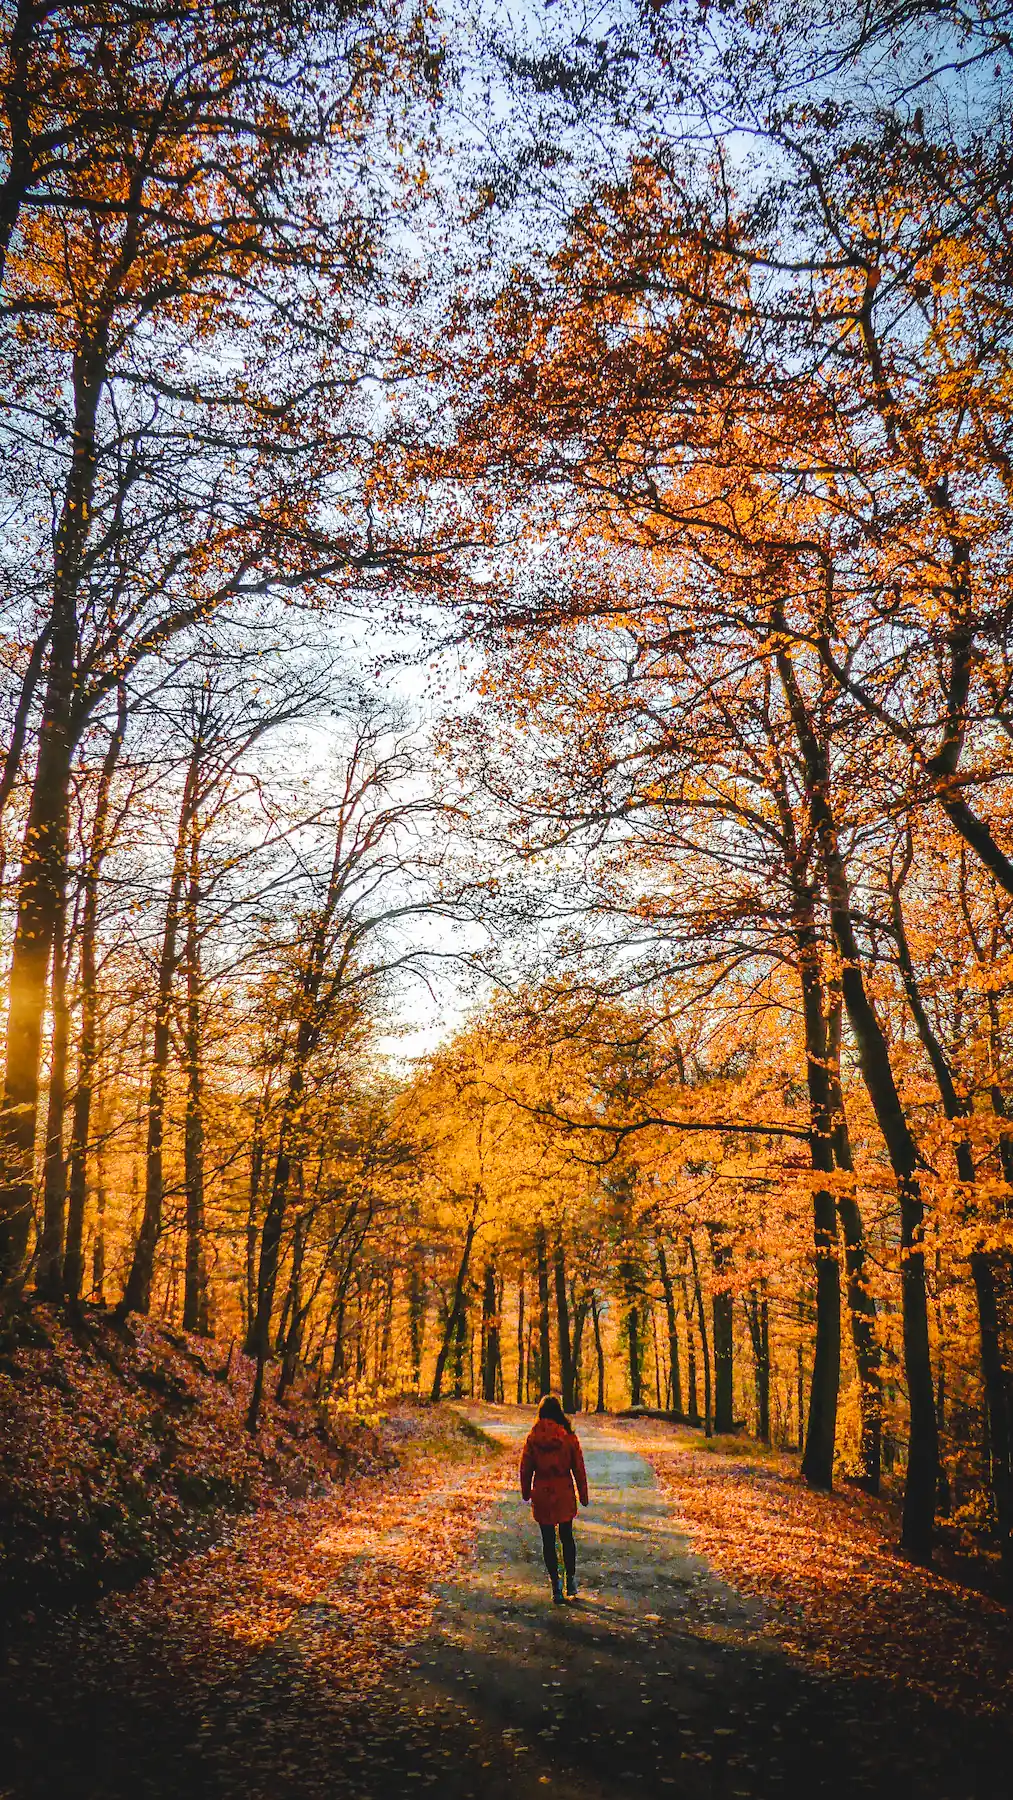 Woman walking through orange autumn forest with golden light shining through trees